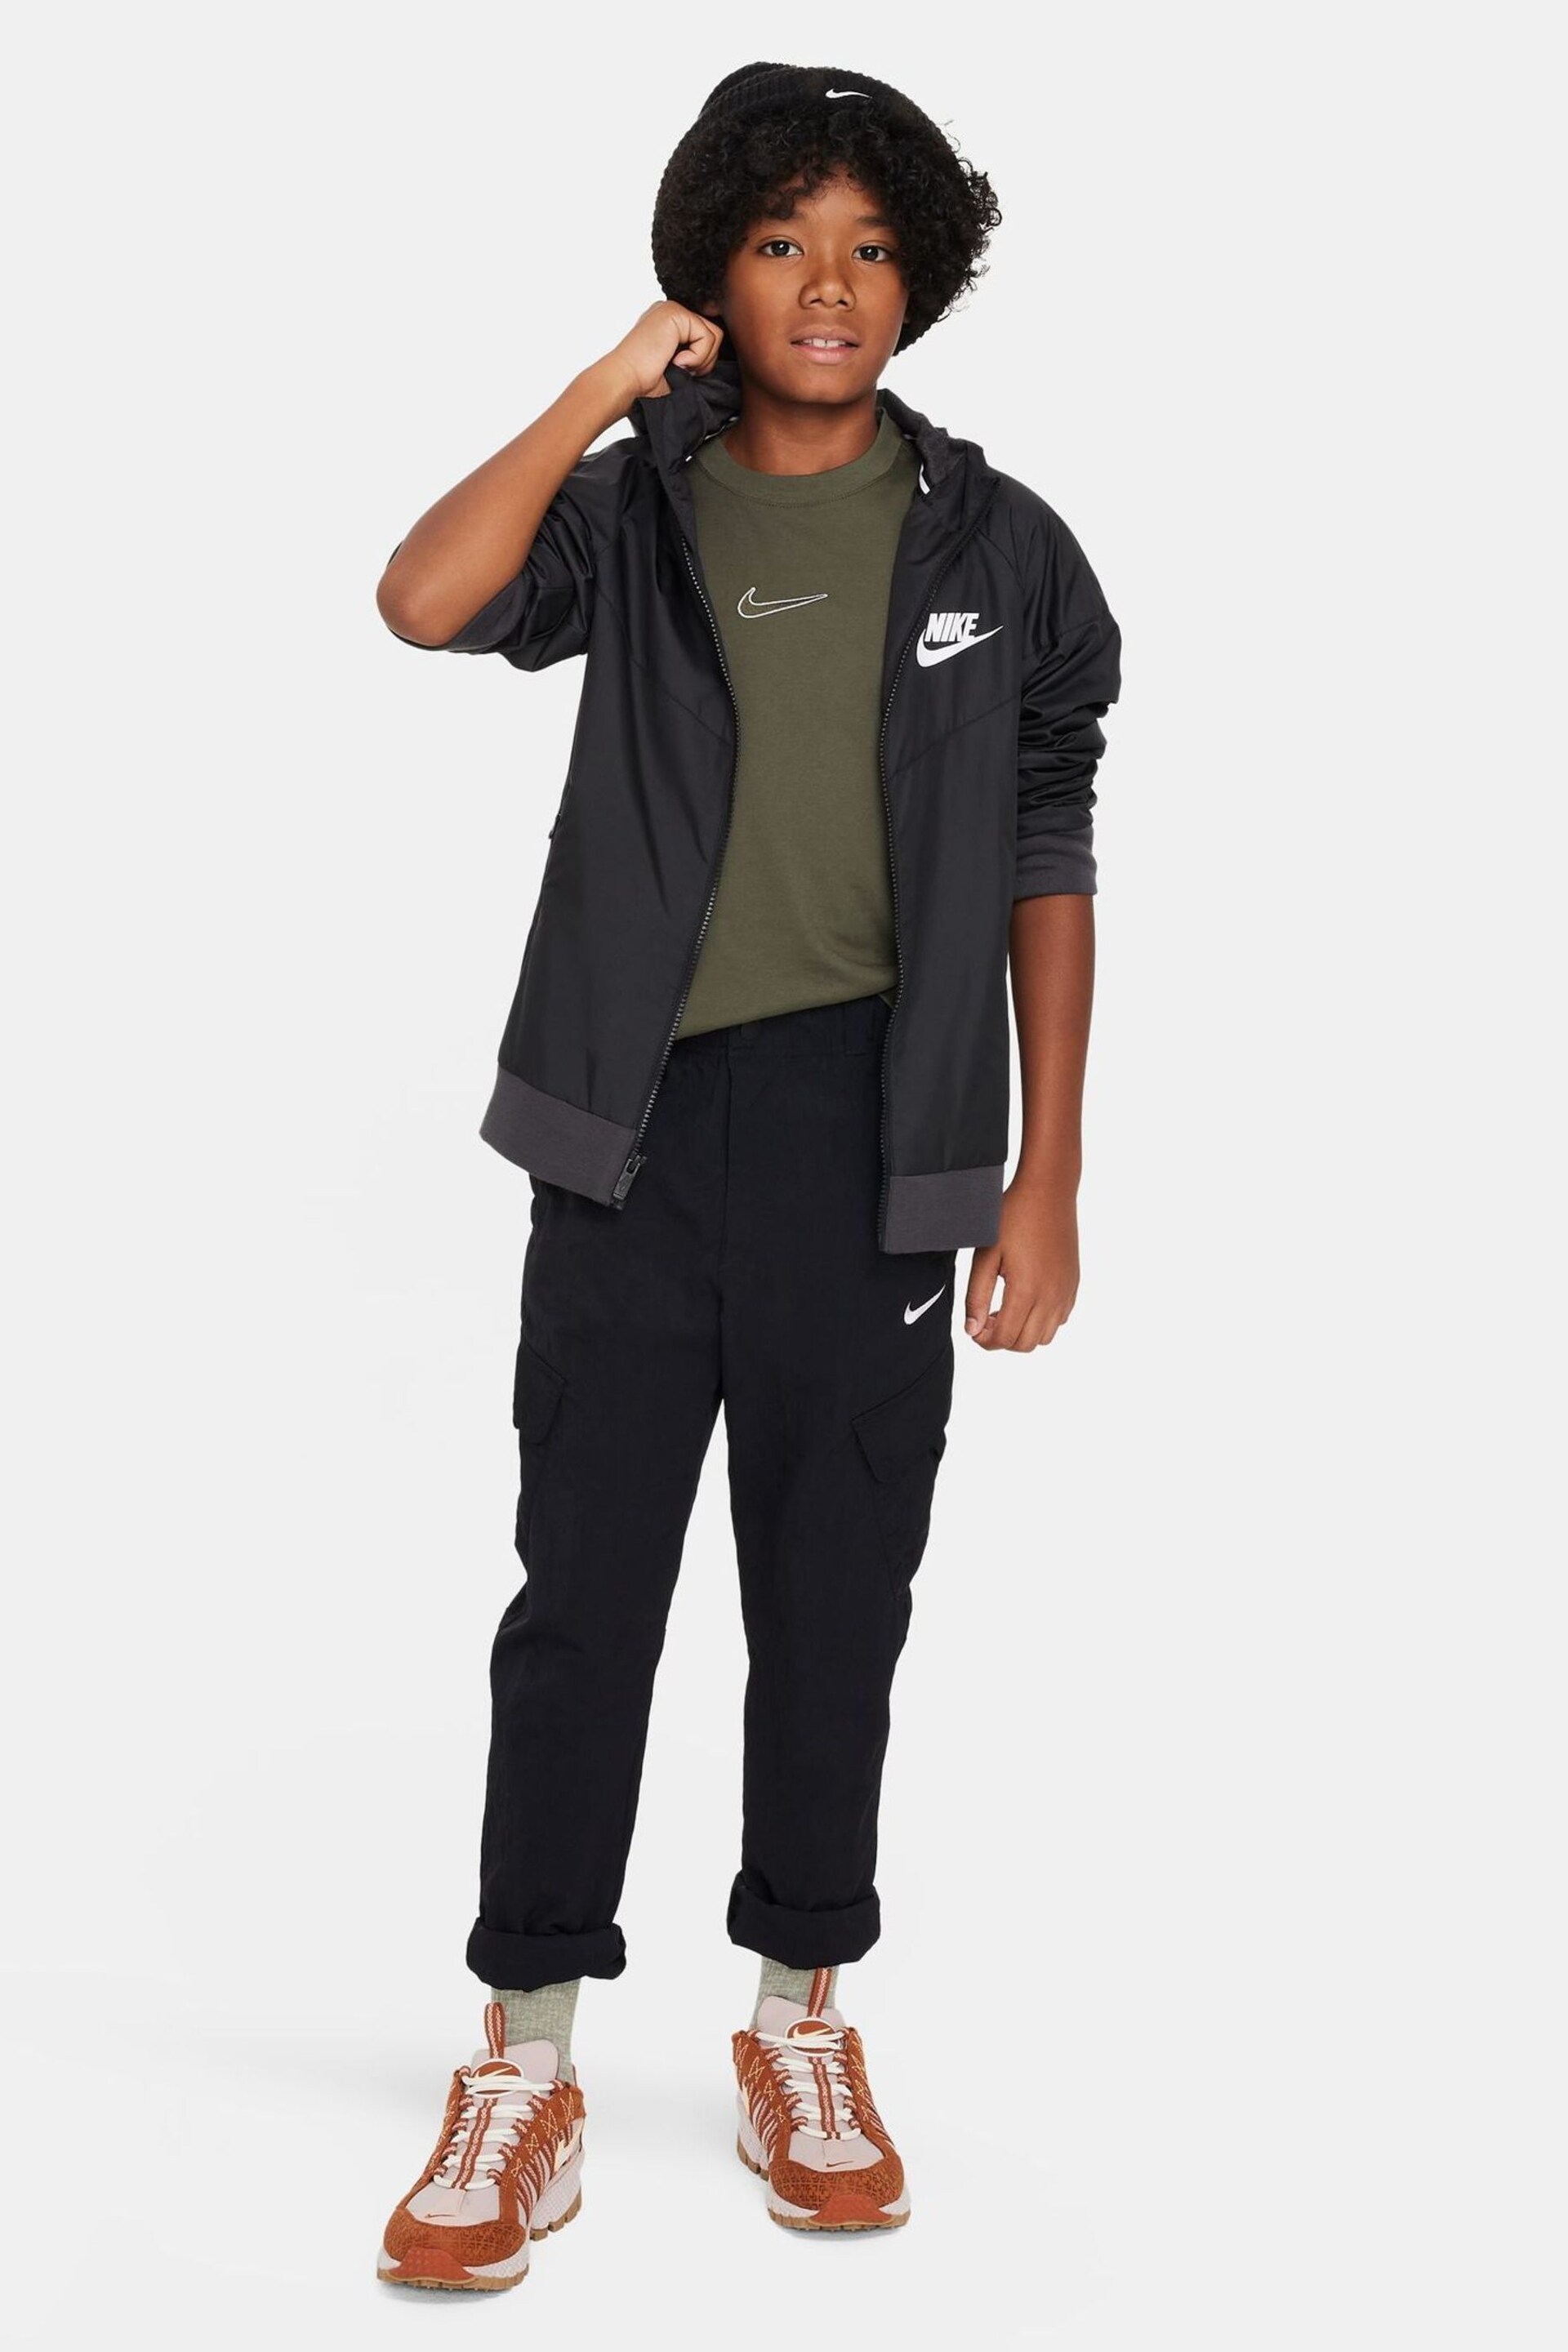 Nike Black Sportswear Windrunner Hooded Jacket - Image 2 of 7